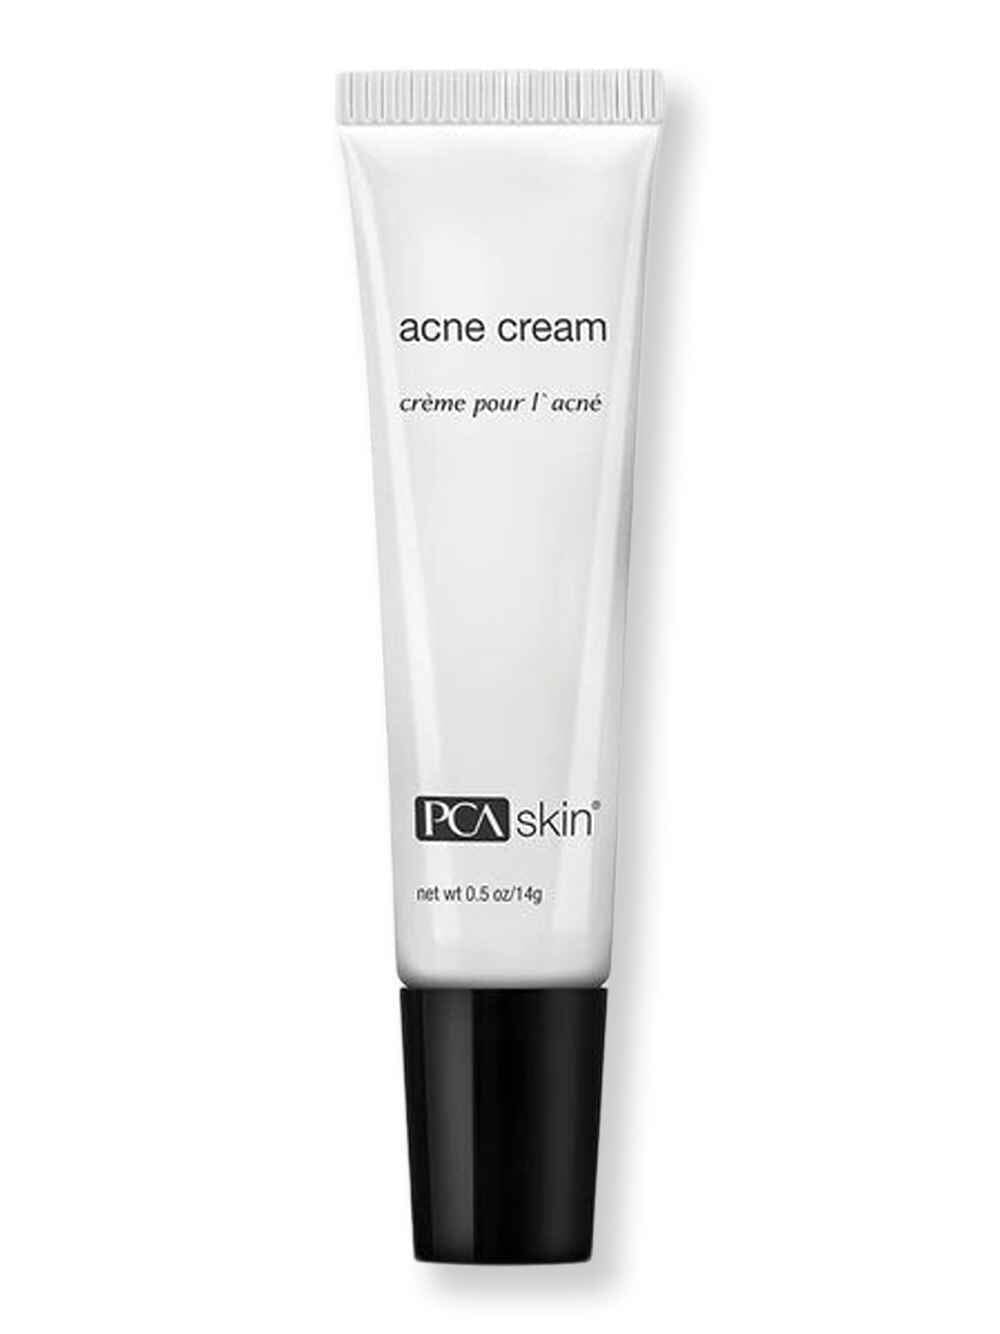 PCA Skin PCA Skin Acne Cream 0.5 oz15 ml Acne, Blemish, & Blackhead Treatments 